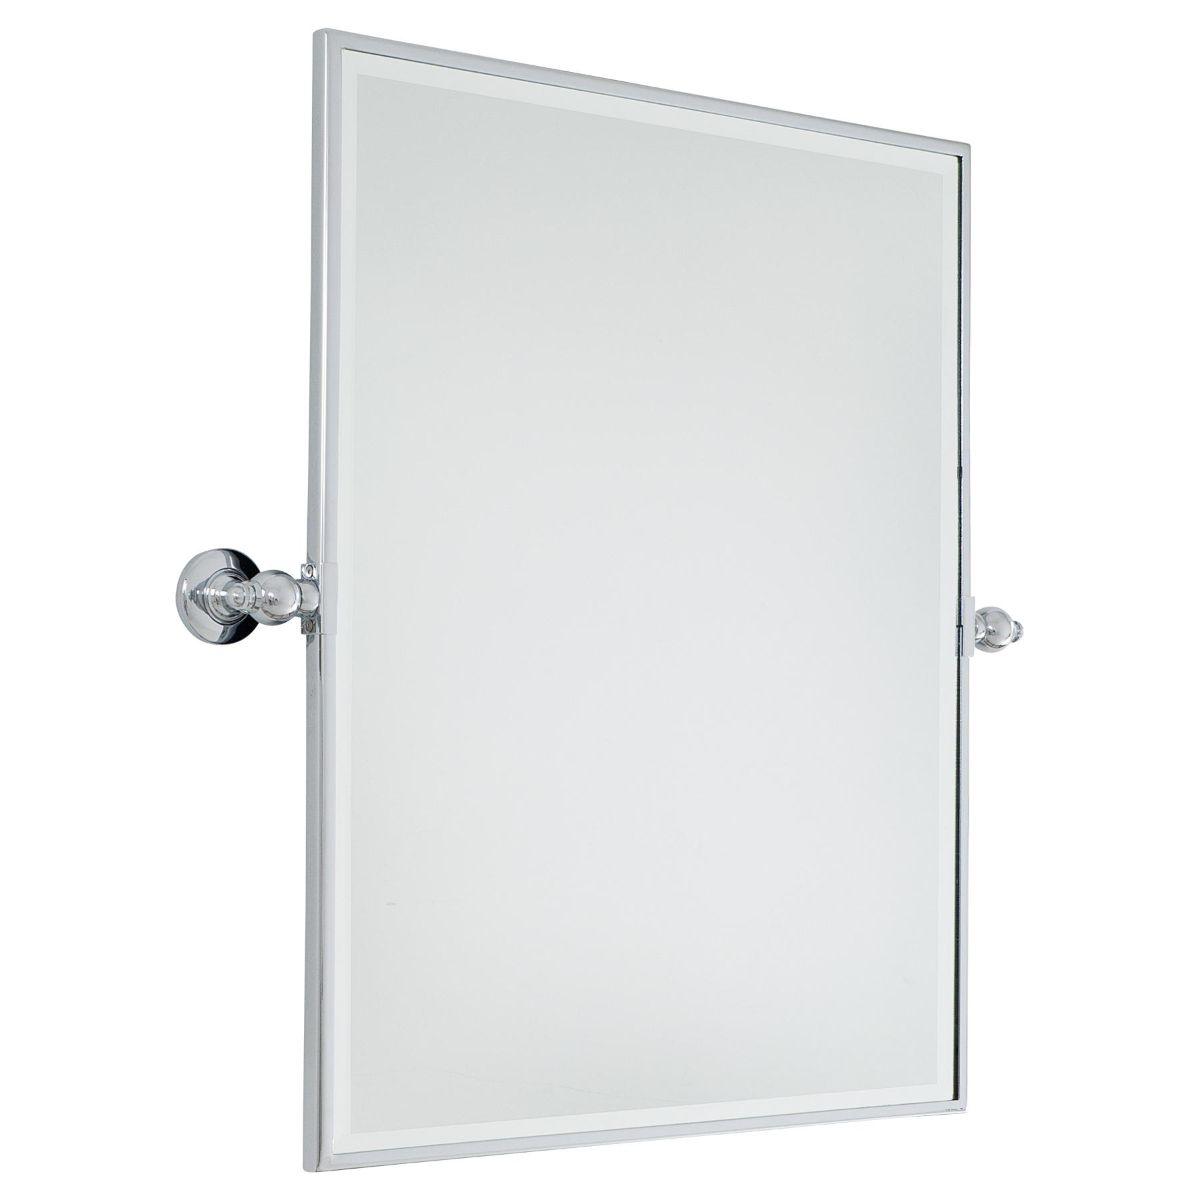 Pivoting Mirrors 29.5 In. X 30.25 In. Bathroom & Vanity Mirror